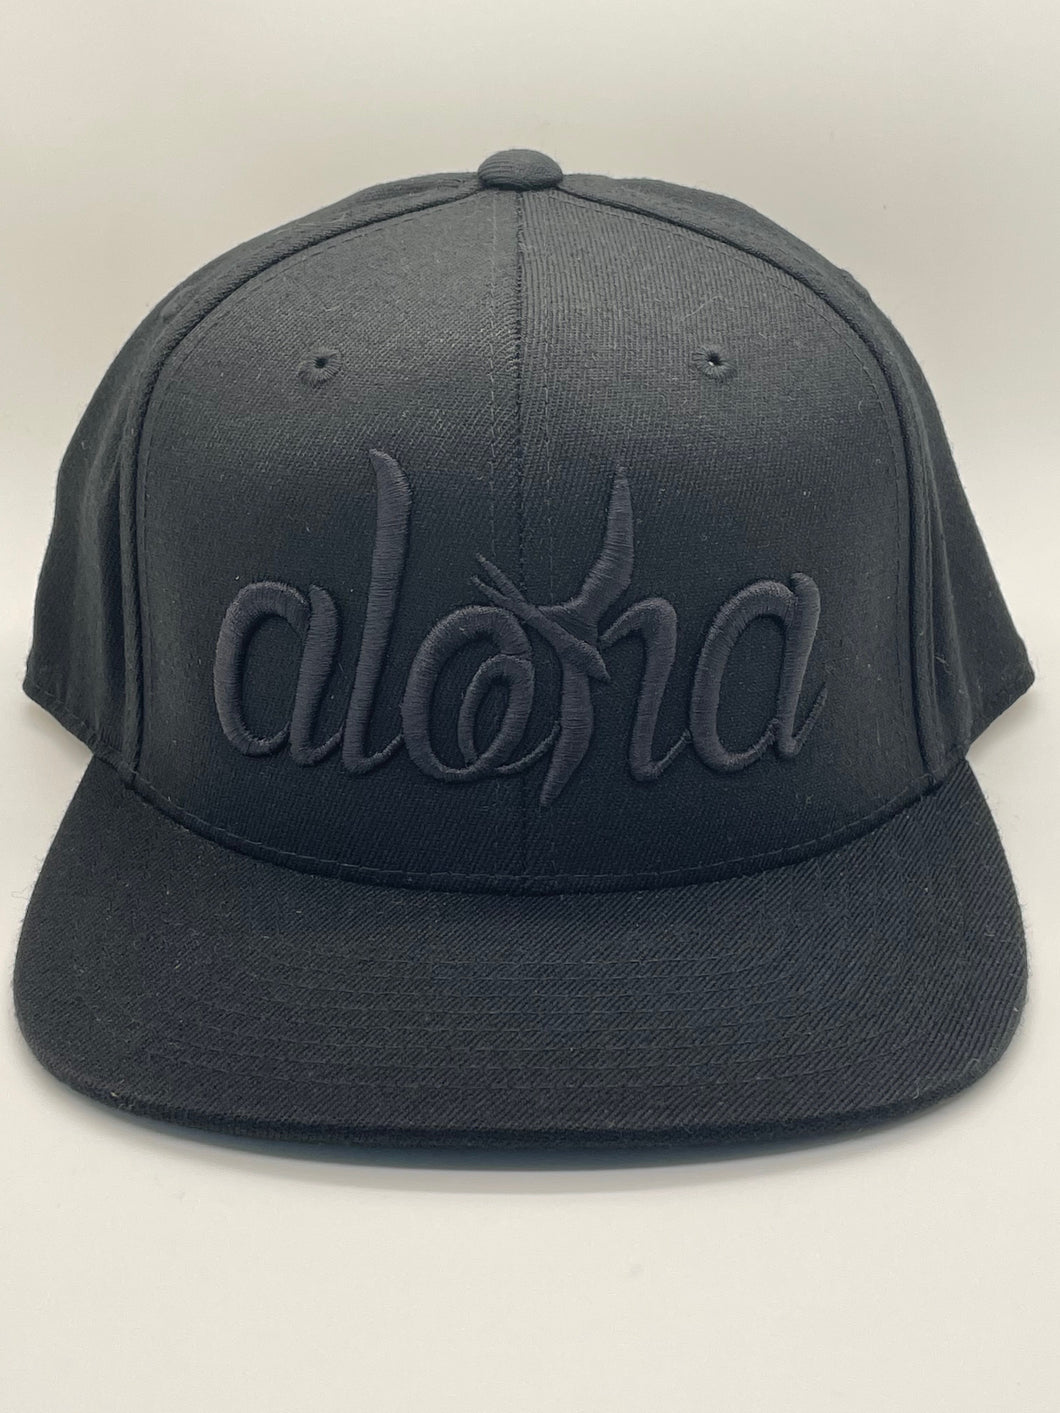 Aloha Black Snapback (Black Embroidery)